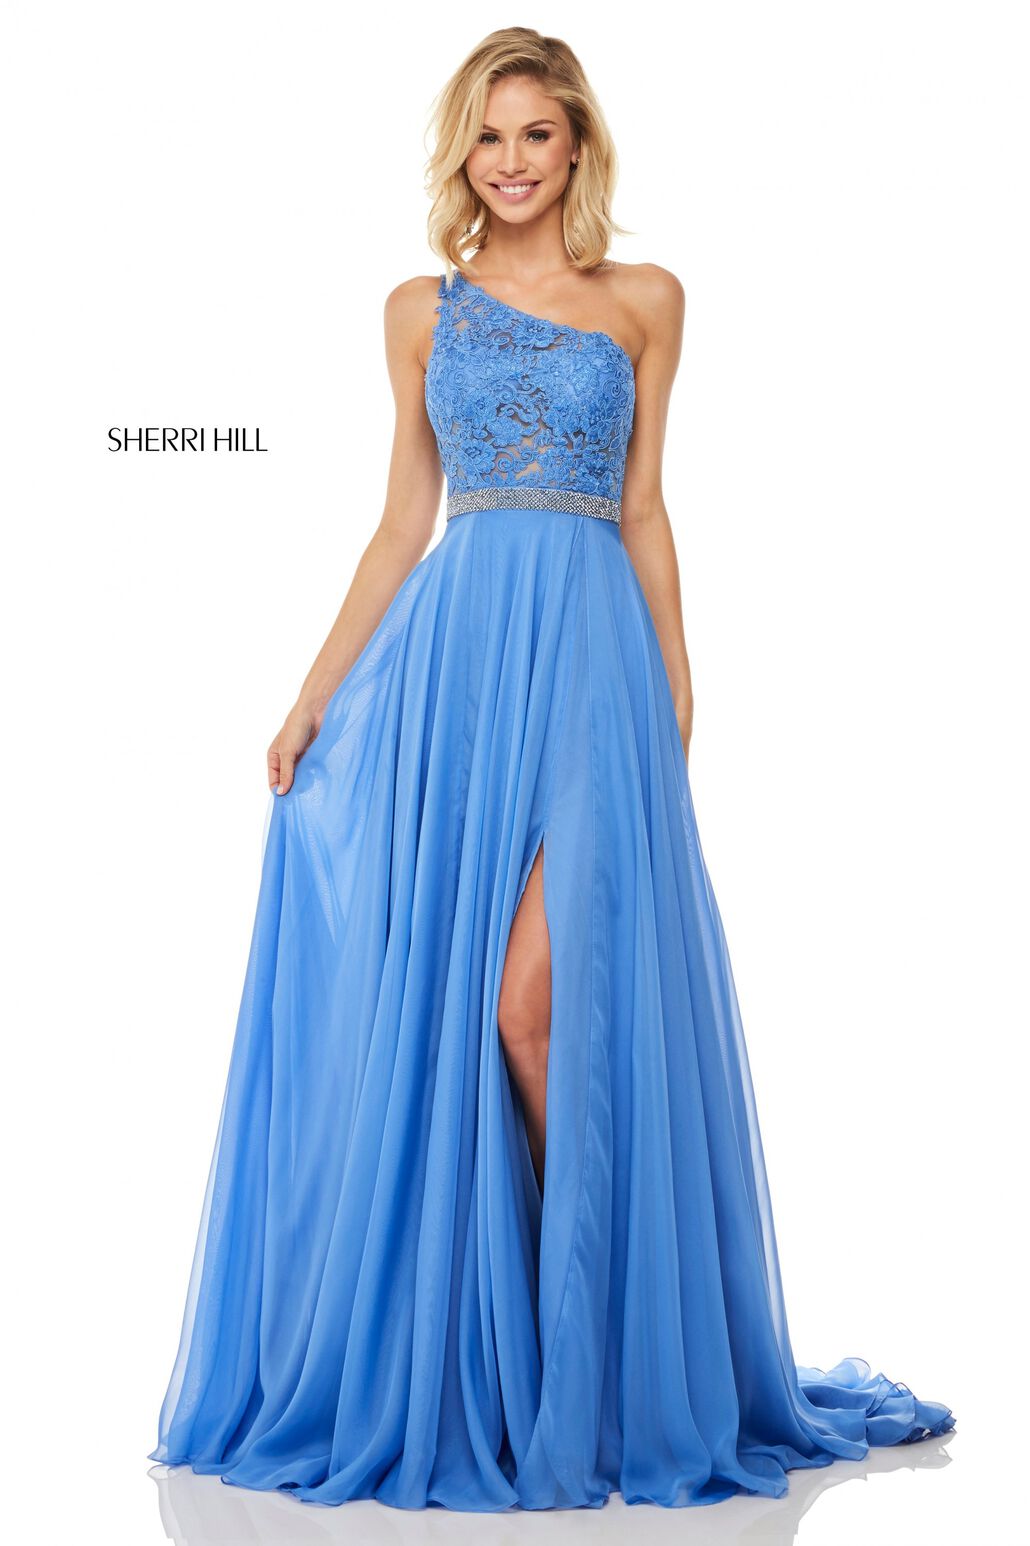 Buy dress style № 52770 designed by SherriHill